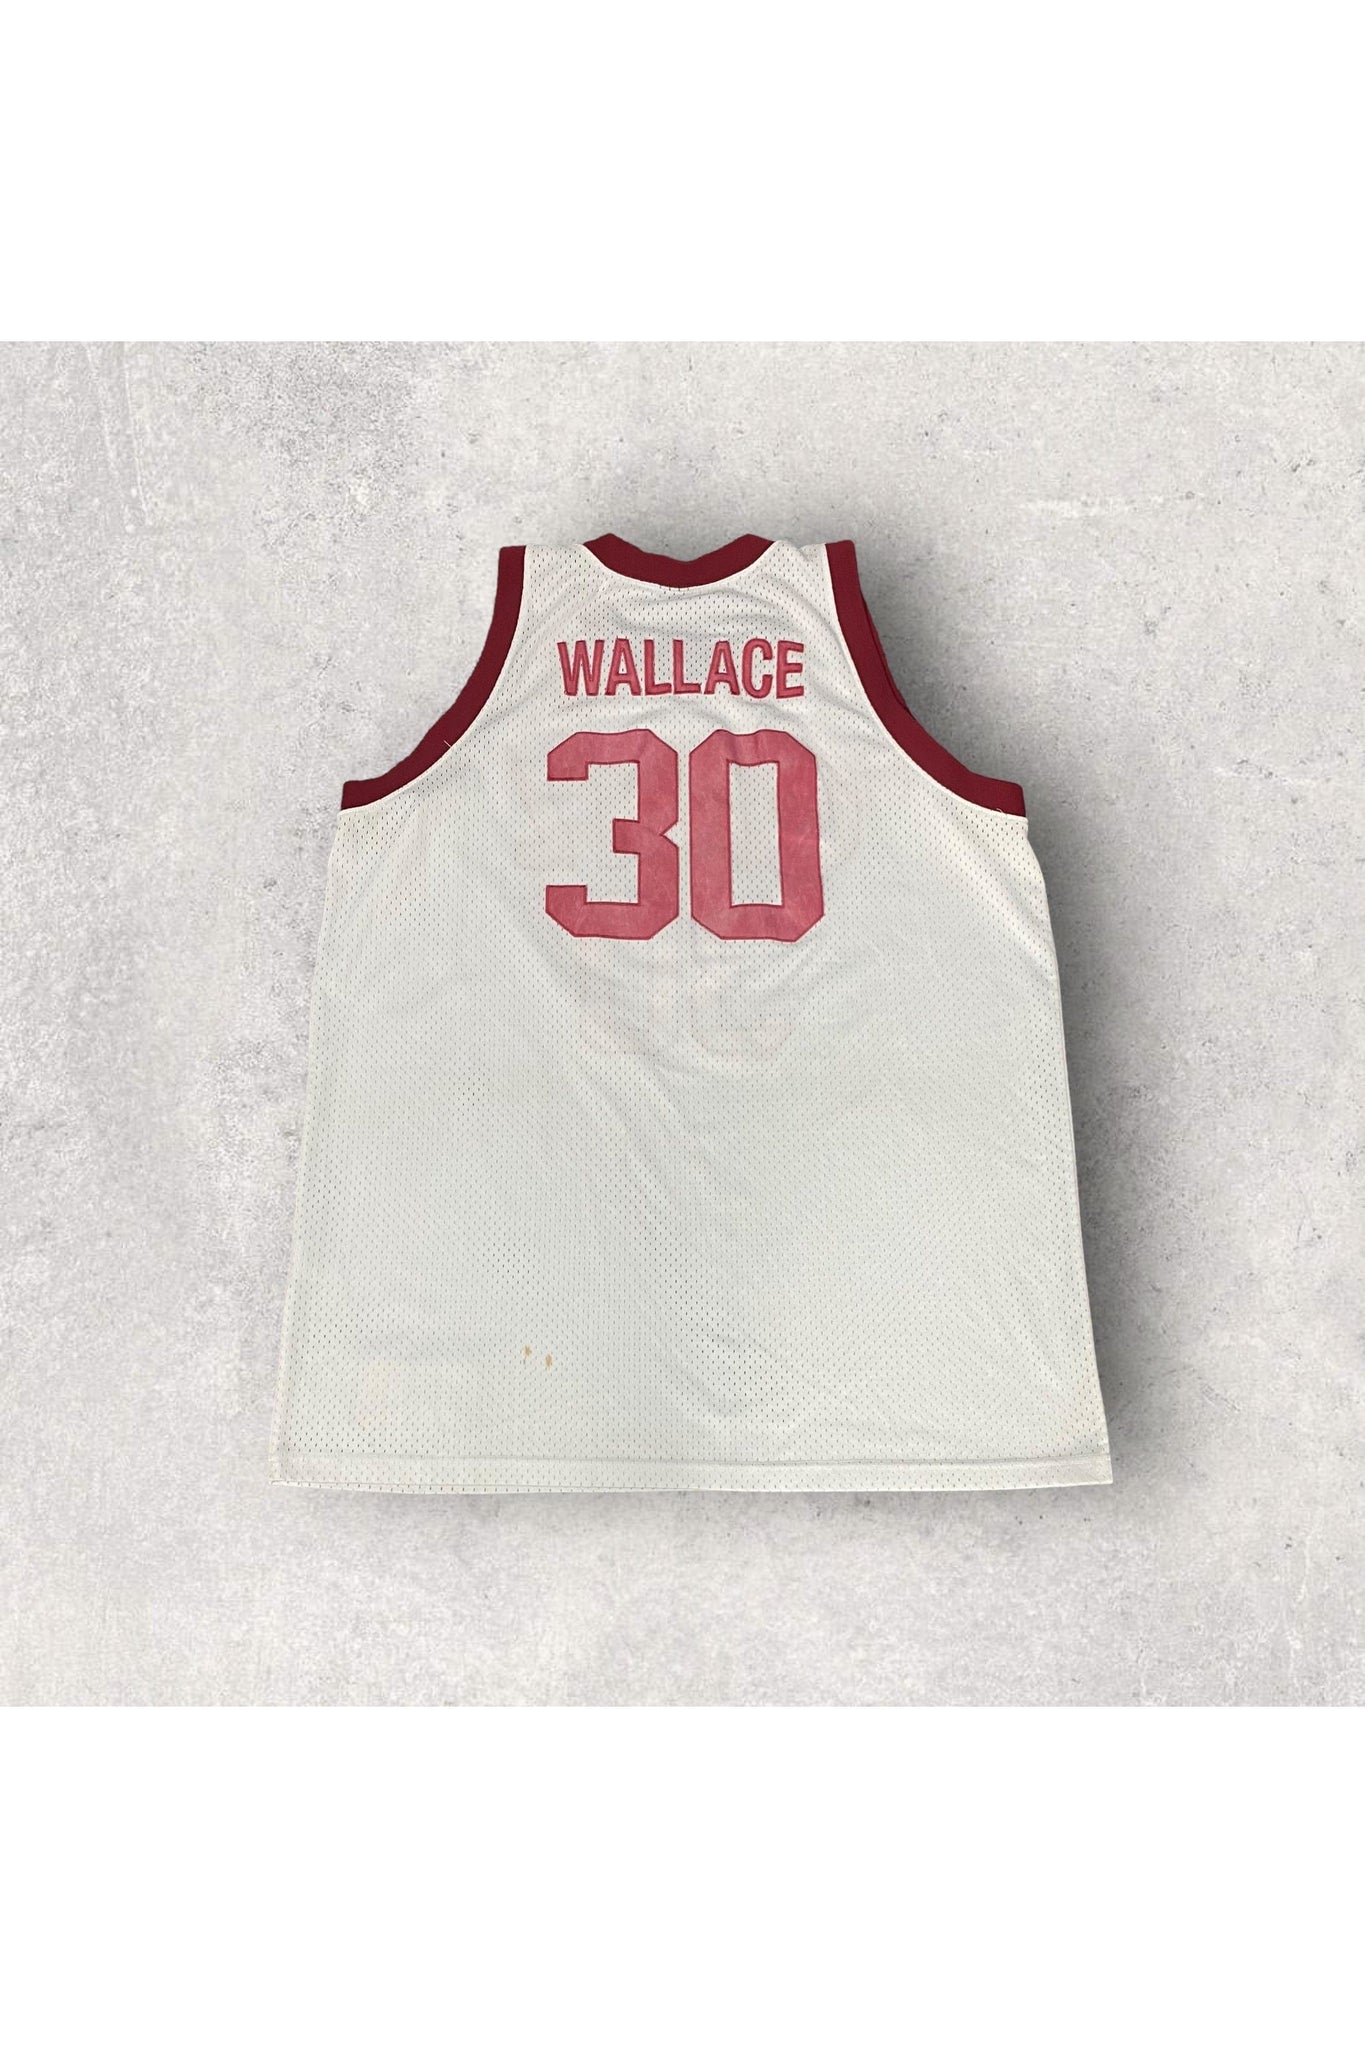 Vintage Team Nike Rasheed Wallace Gratz Highschool Basketball Jersey- XXL